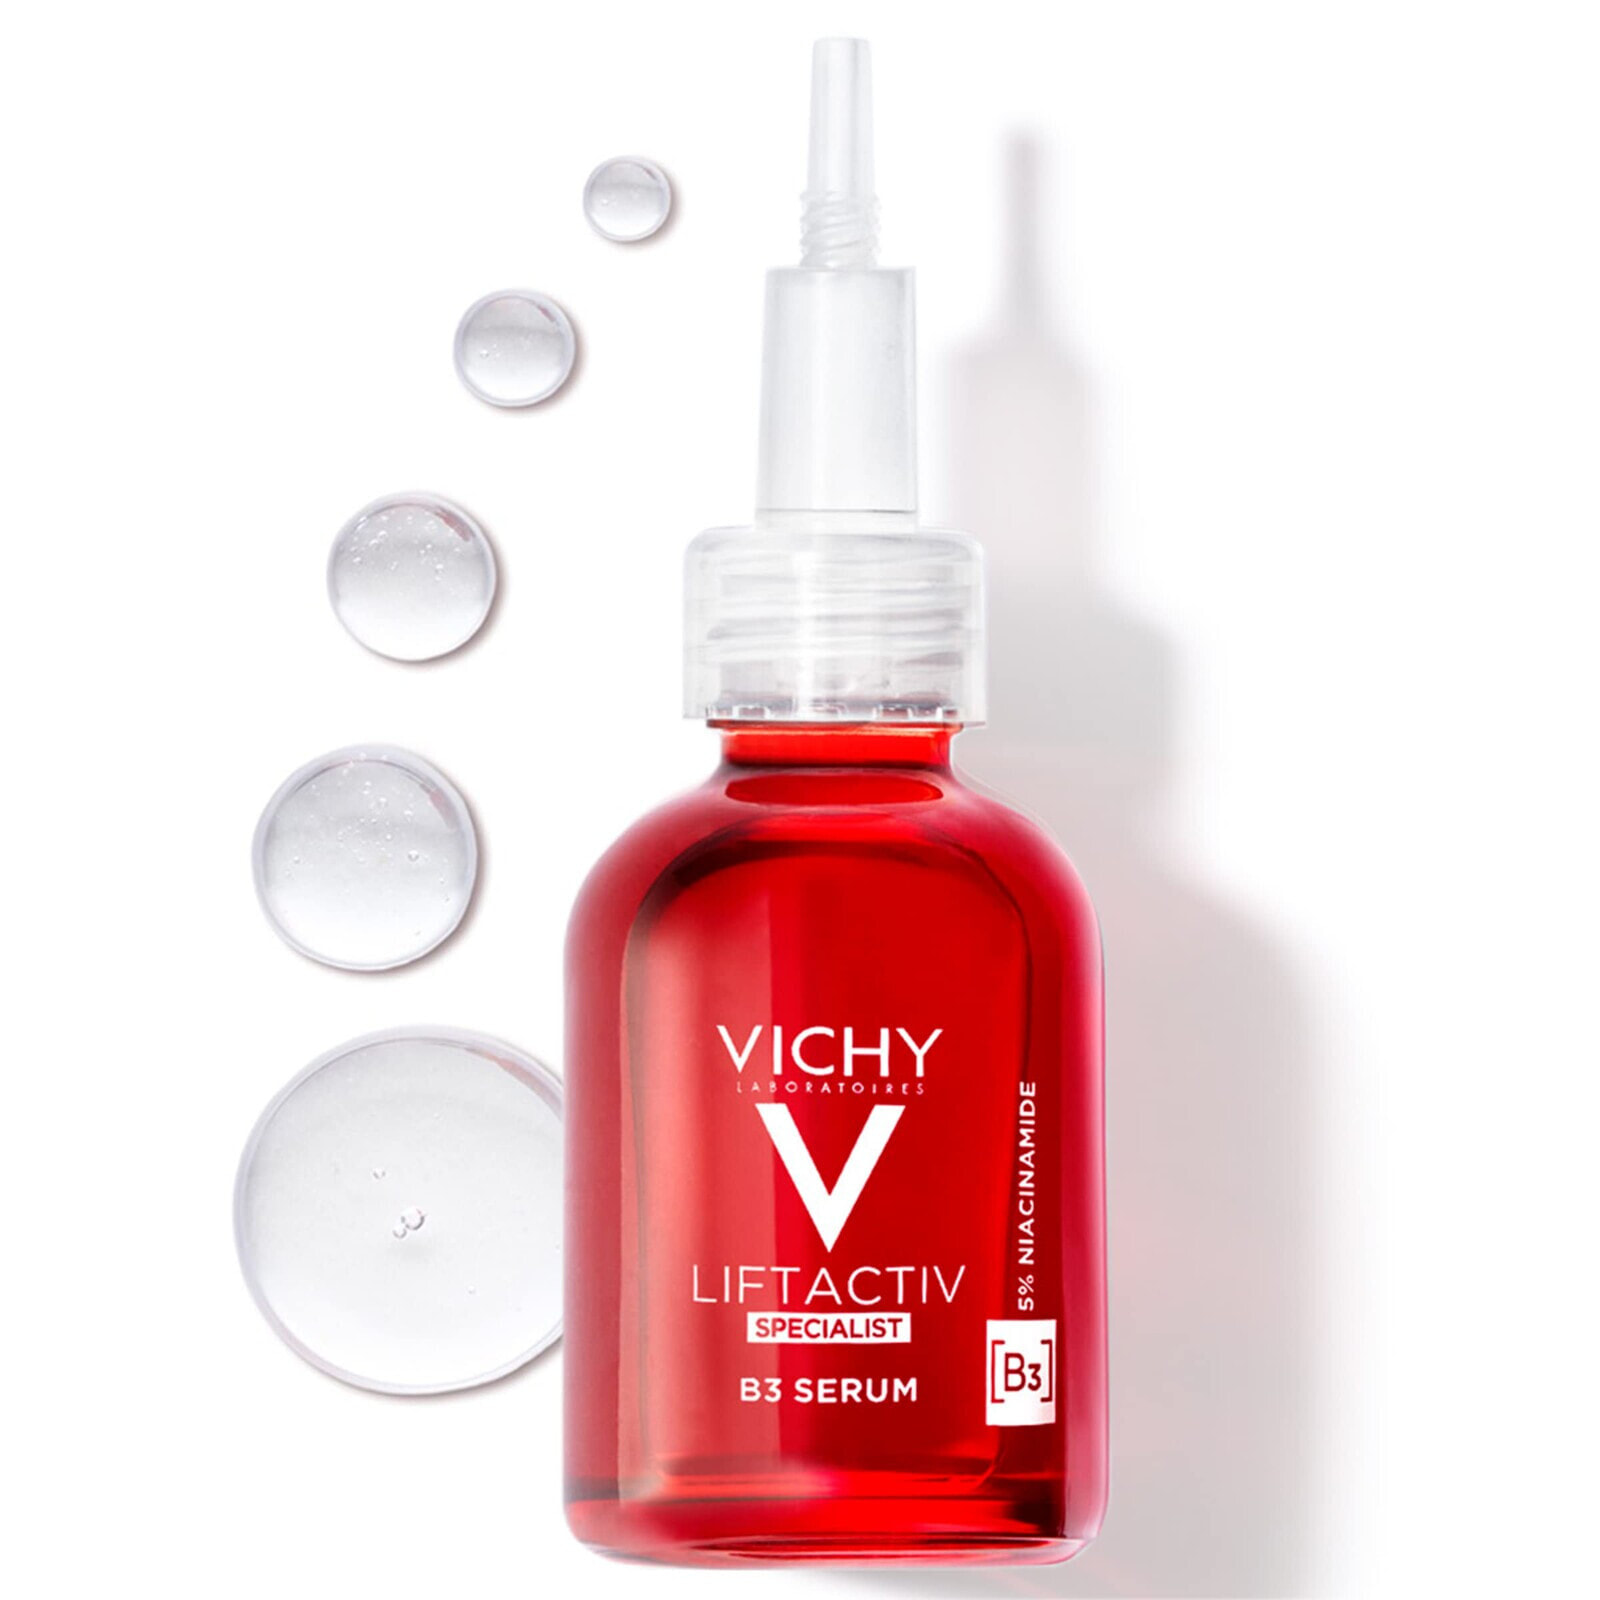 Сыворотка против морщин VICHY Serum against pigment spots and wrinkles Liftactiv Special ist B3 (Serum) 30 ml